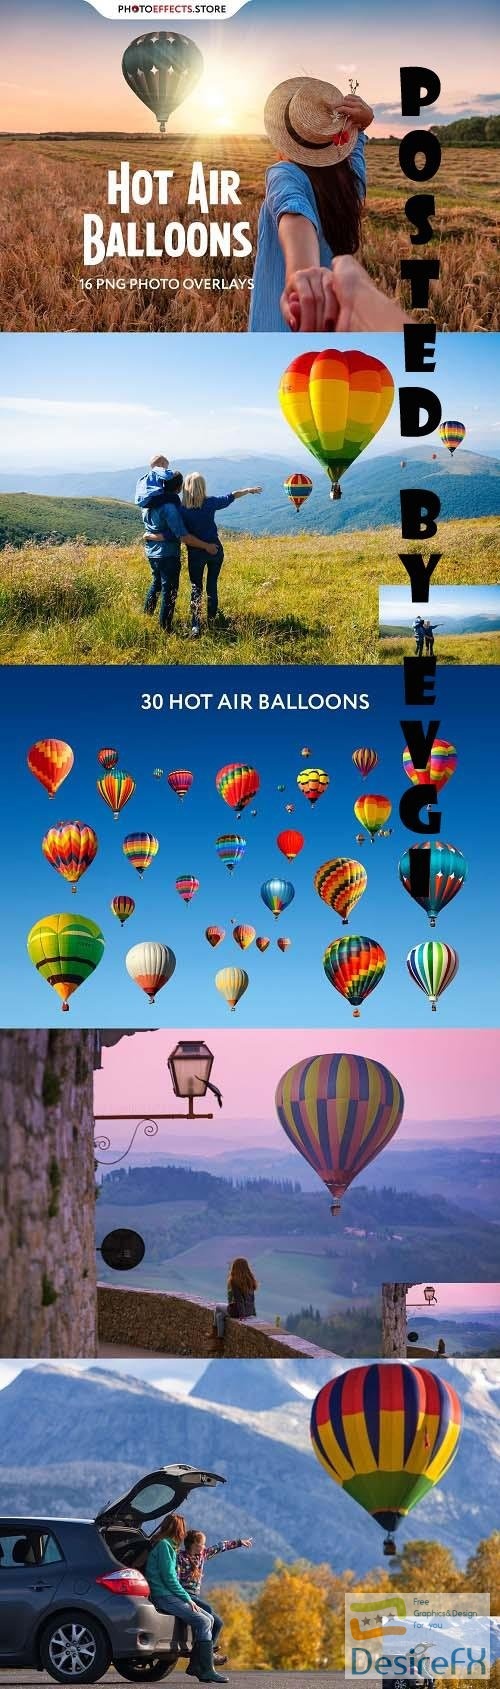 16 Hot Air Balloons Photo Overlays - 6564329